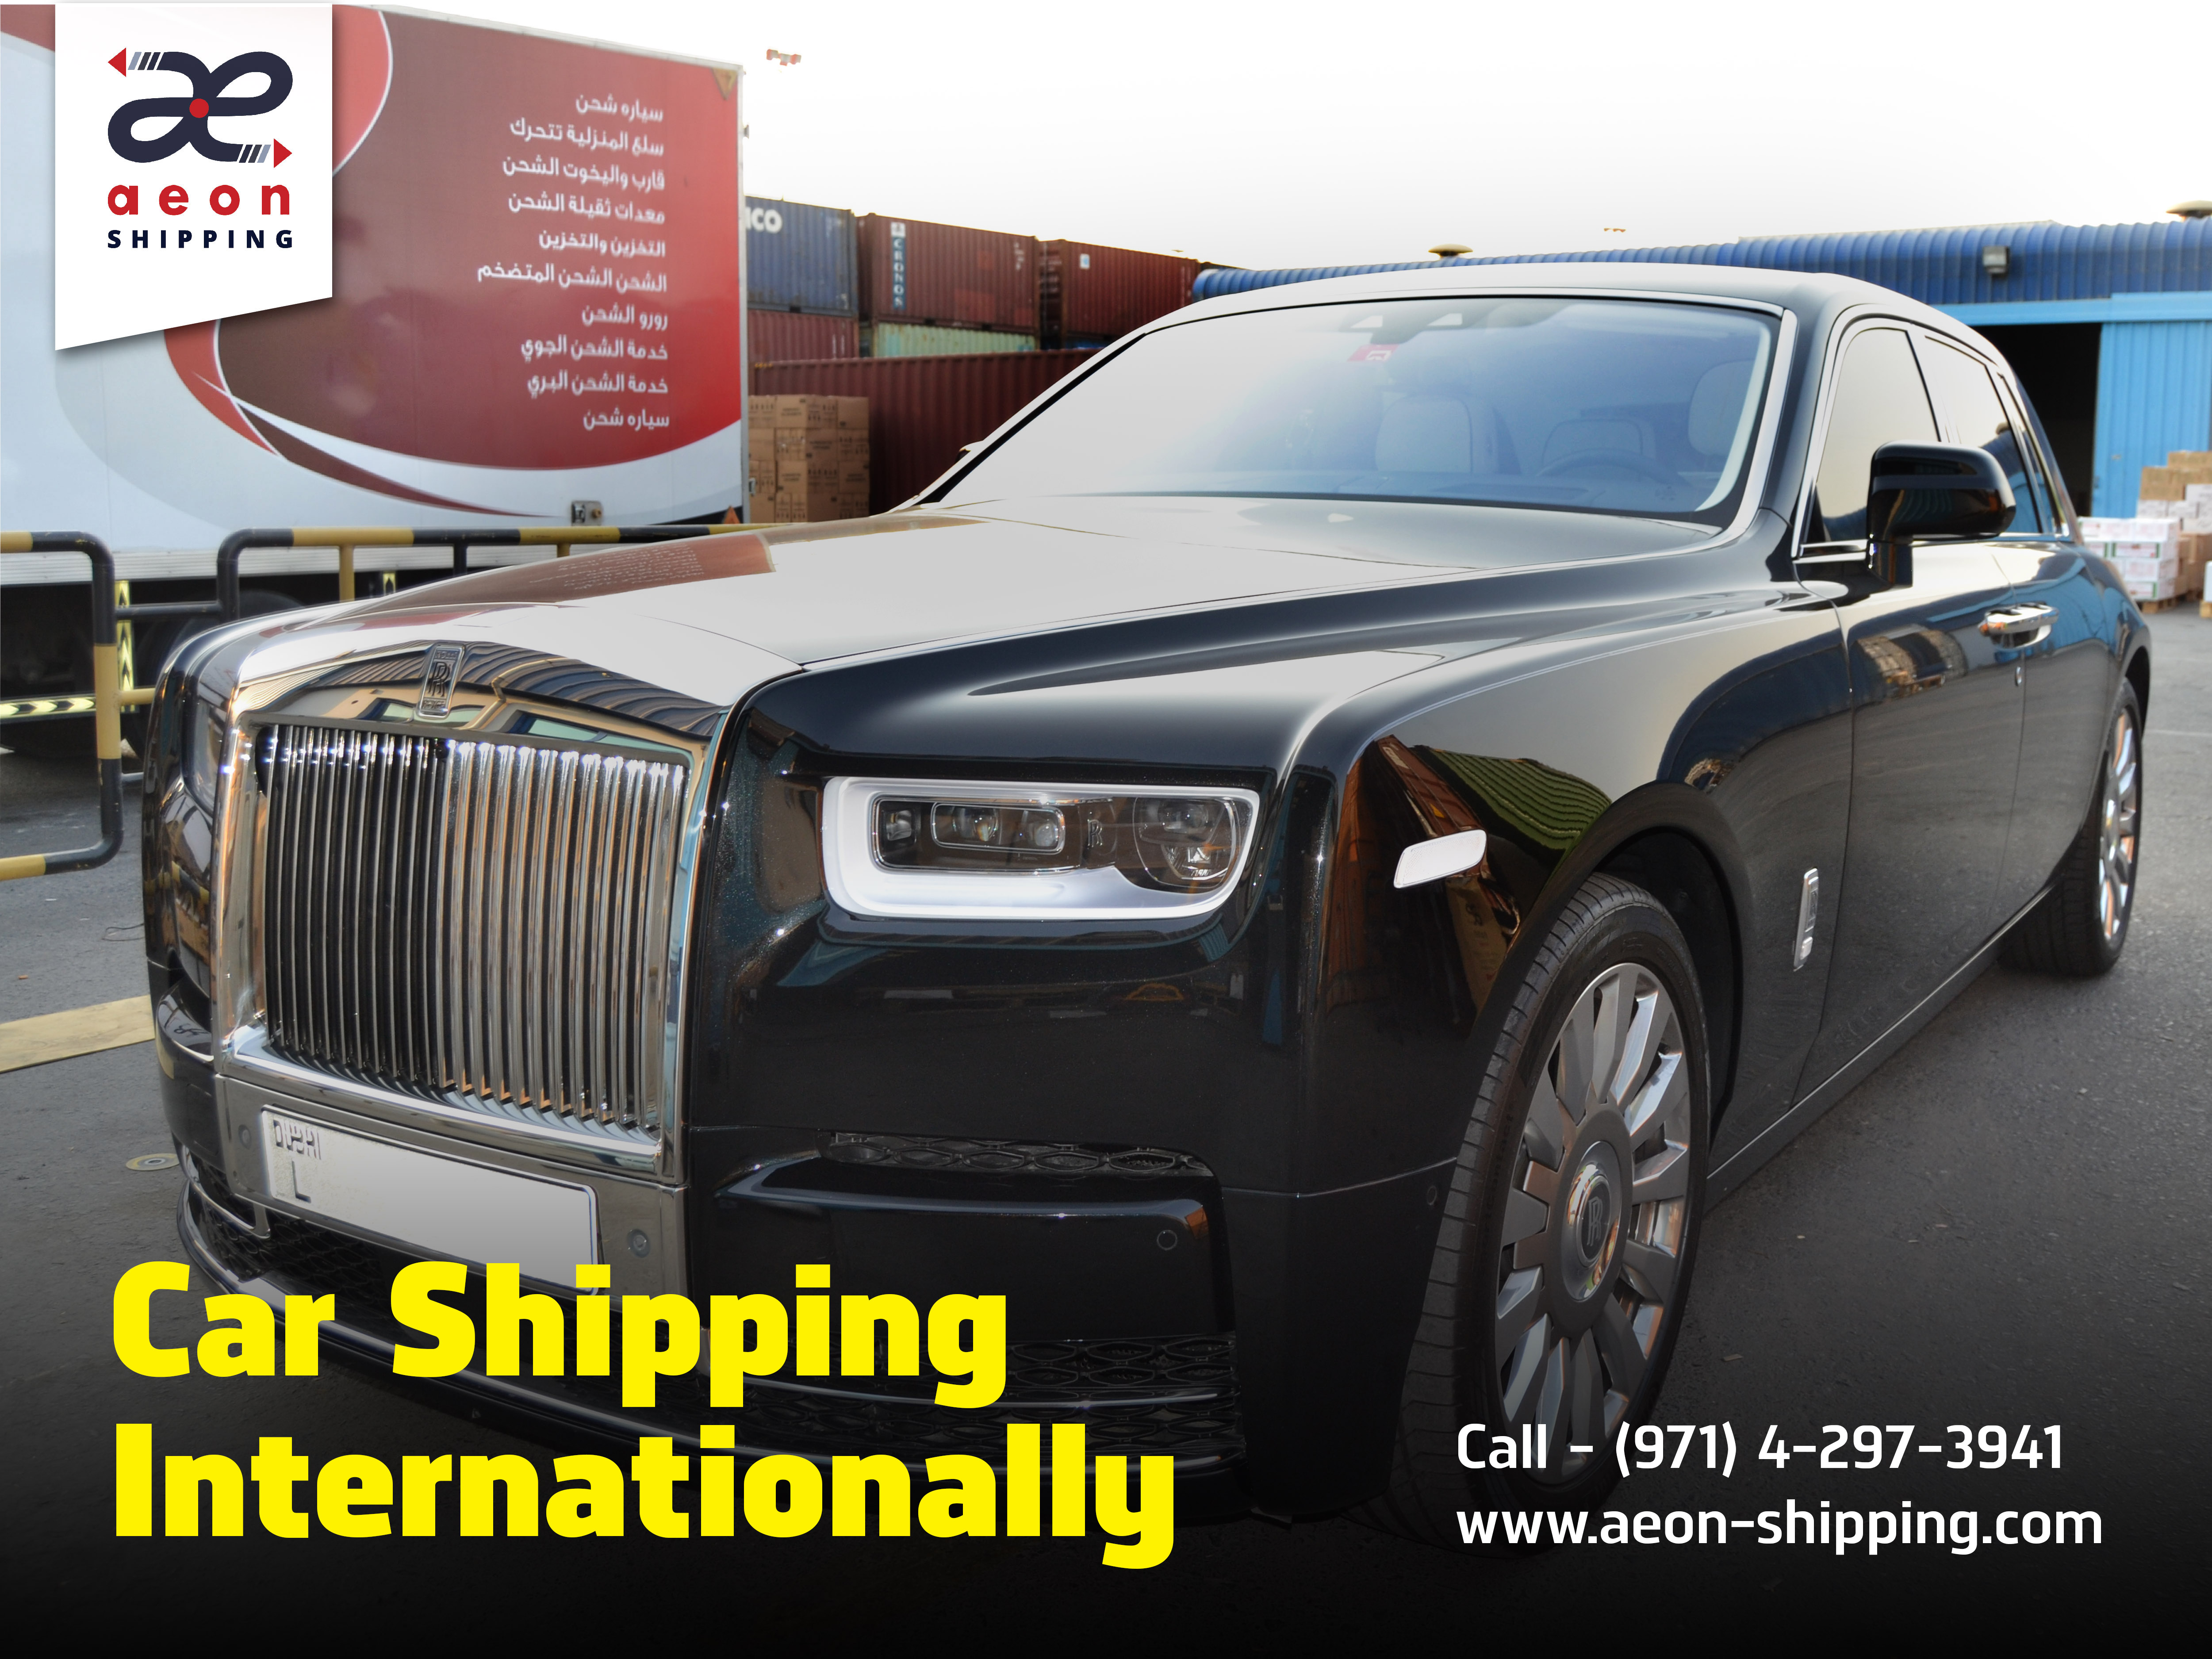 Car shipping internationally